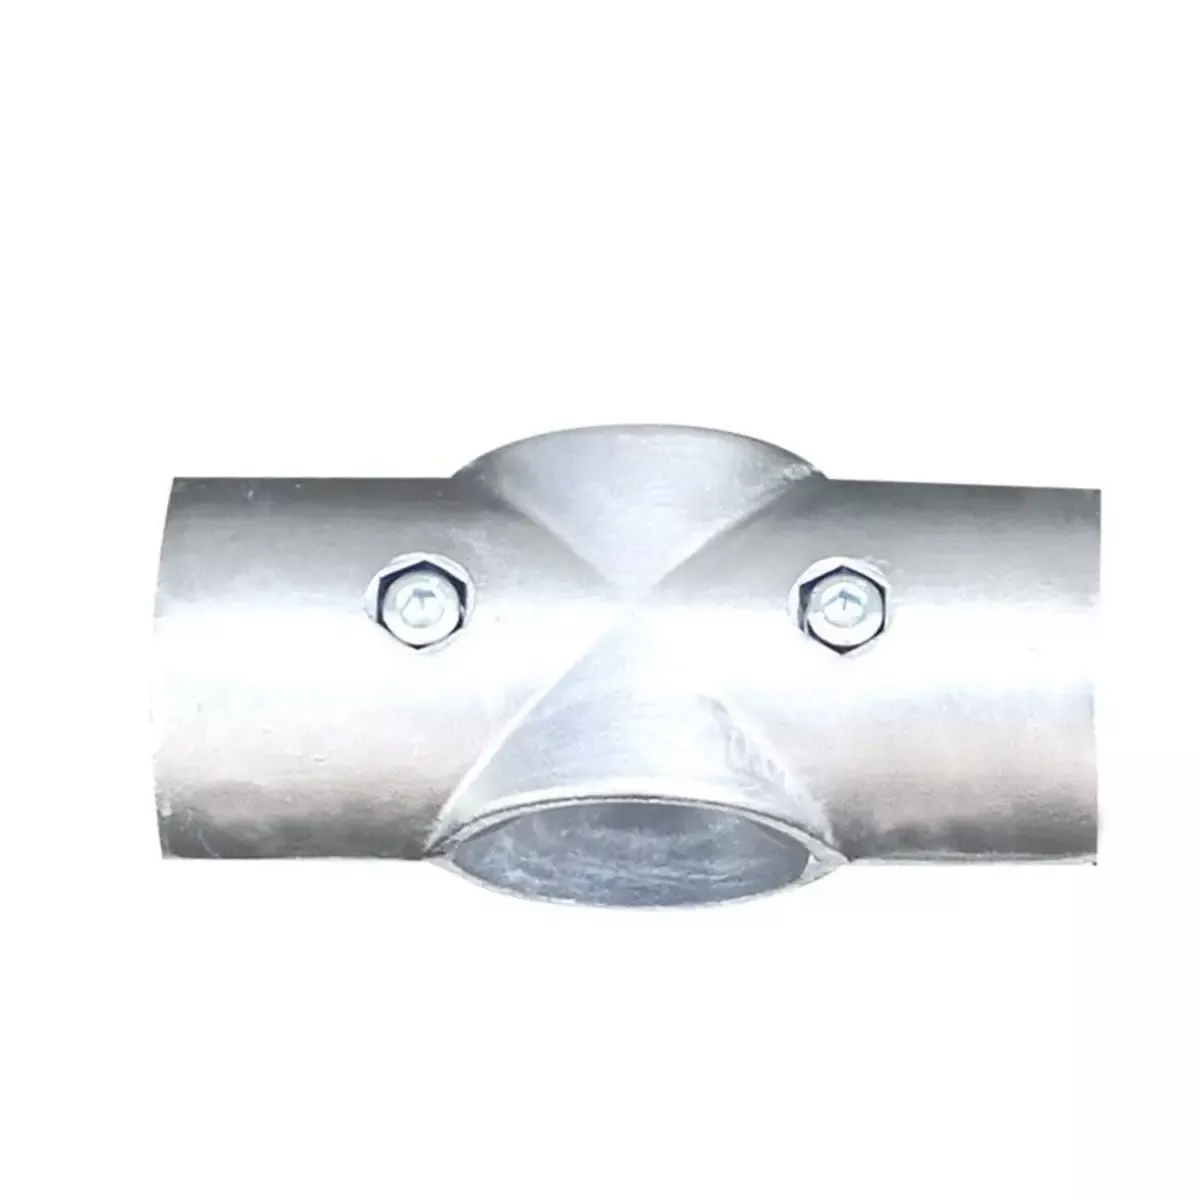 Aluminium-Kreuzstück für Barrieren Stahlrohre Ø 60 mm